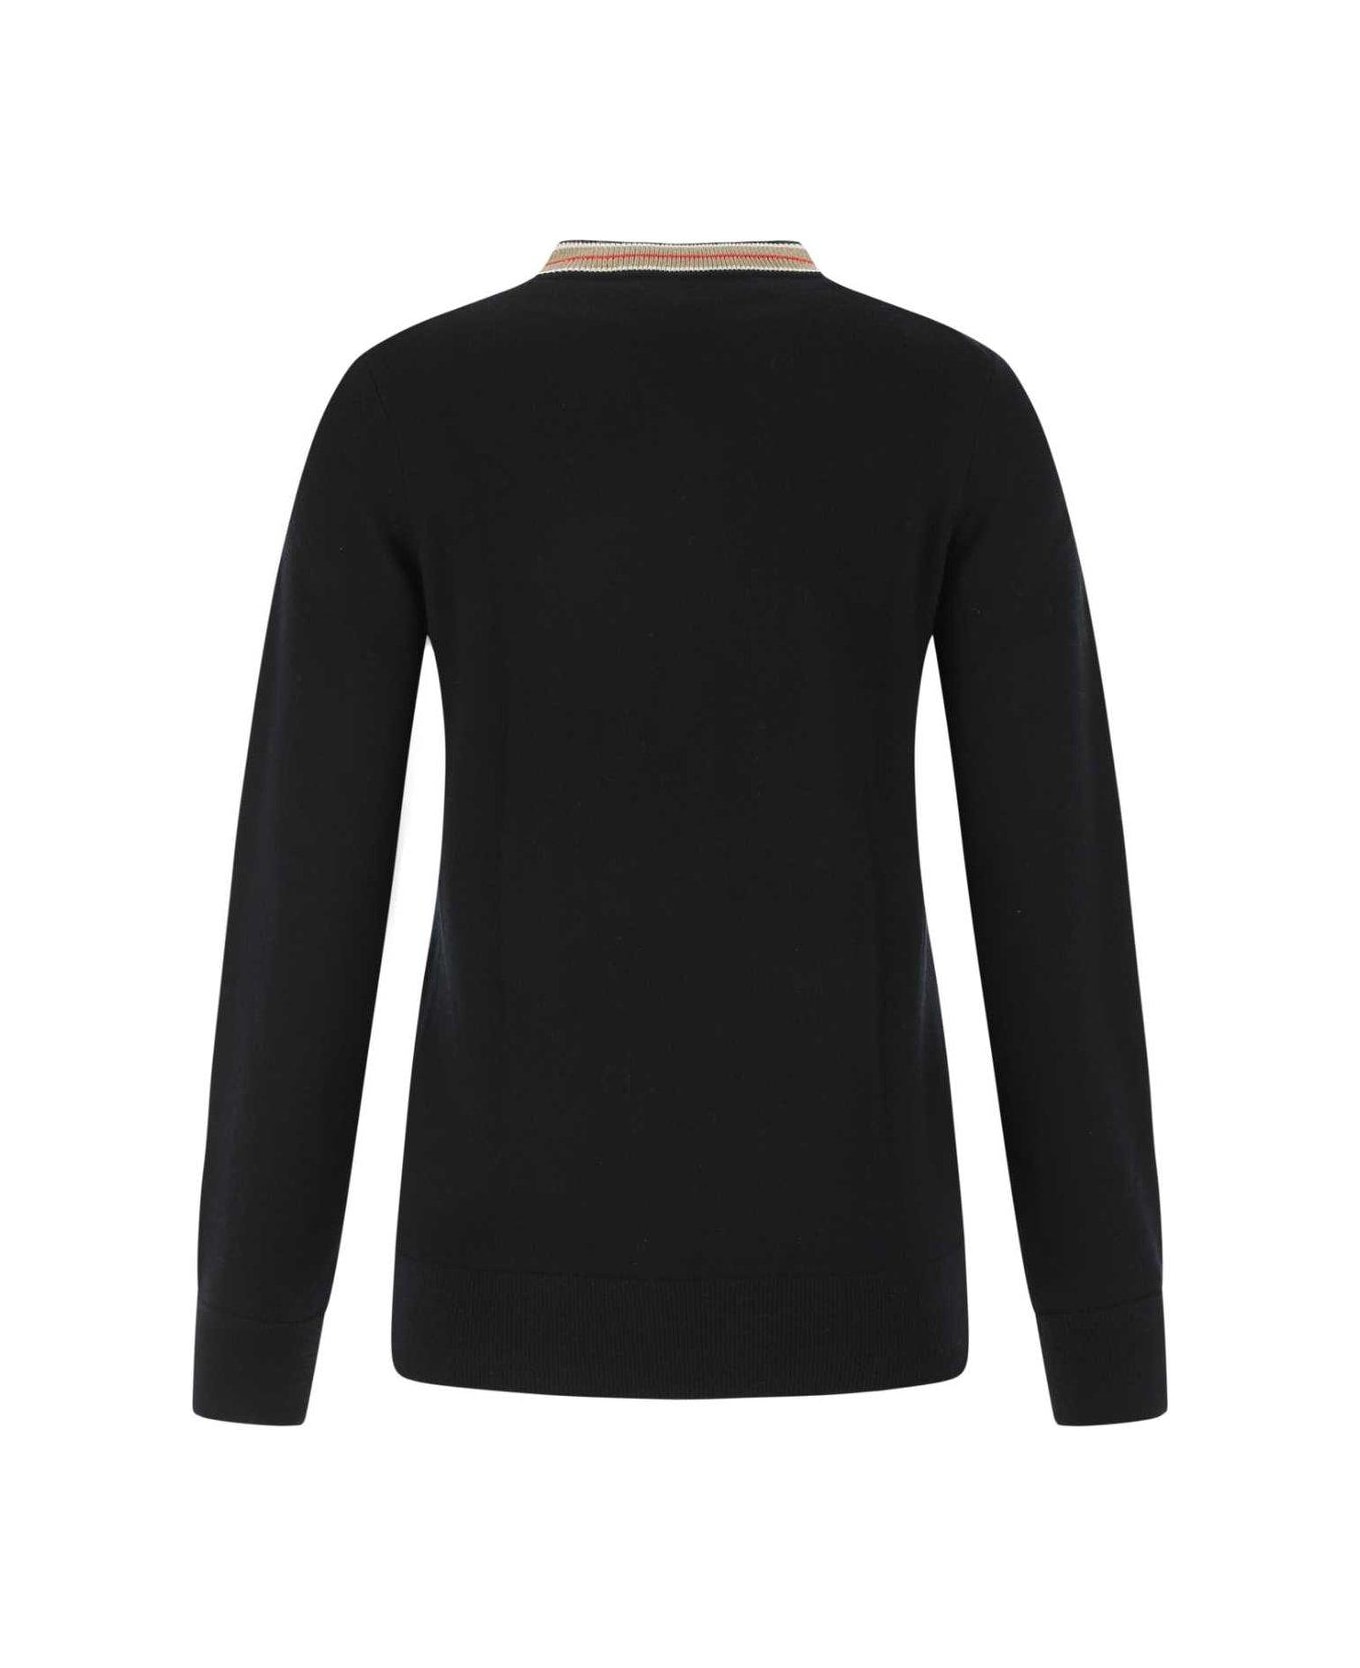 Burberry Stripe Detailed Sweater - Black